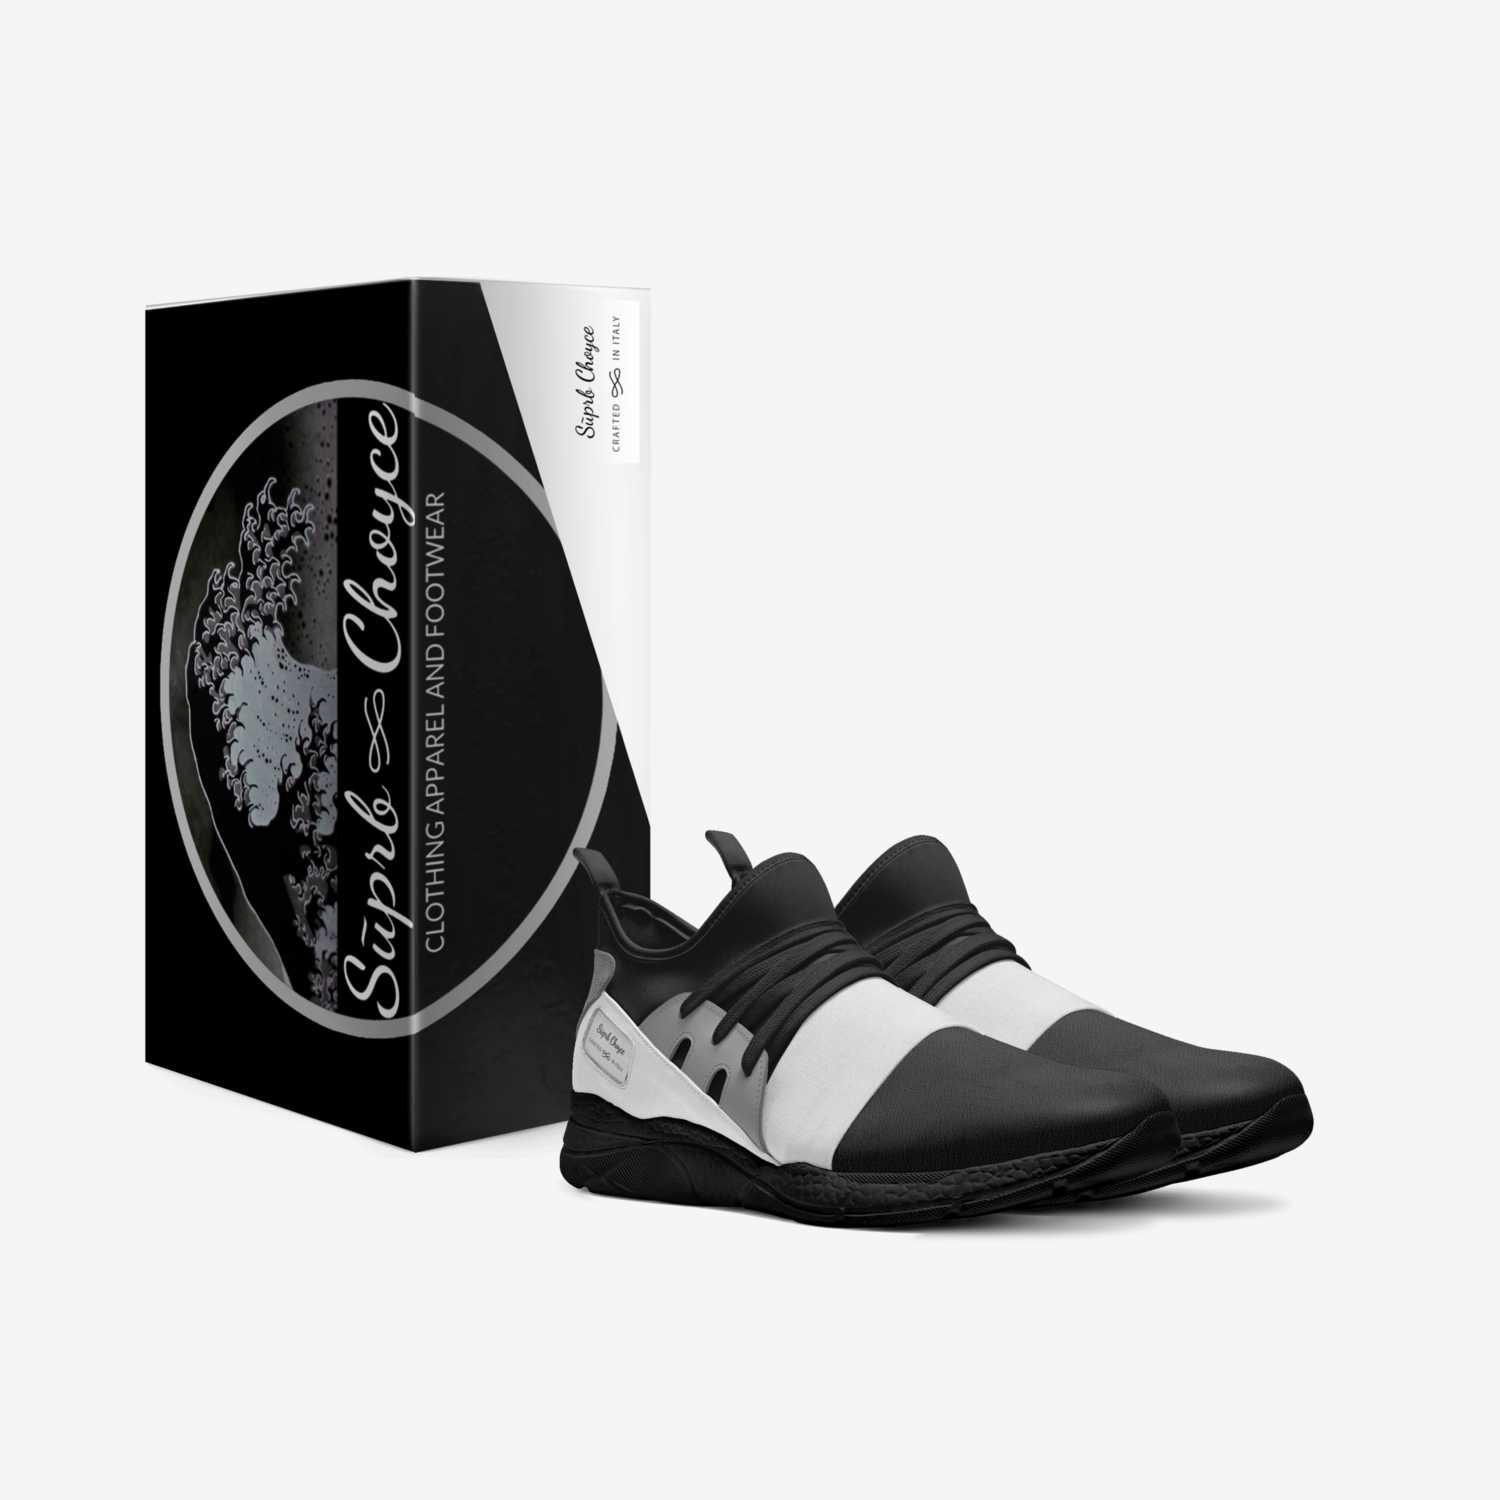 Sūprb Choyce custom made in Italy shoes by Omari Choyce | Box view